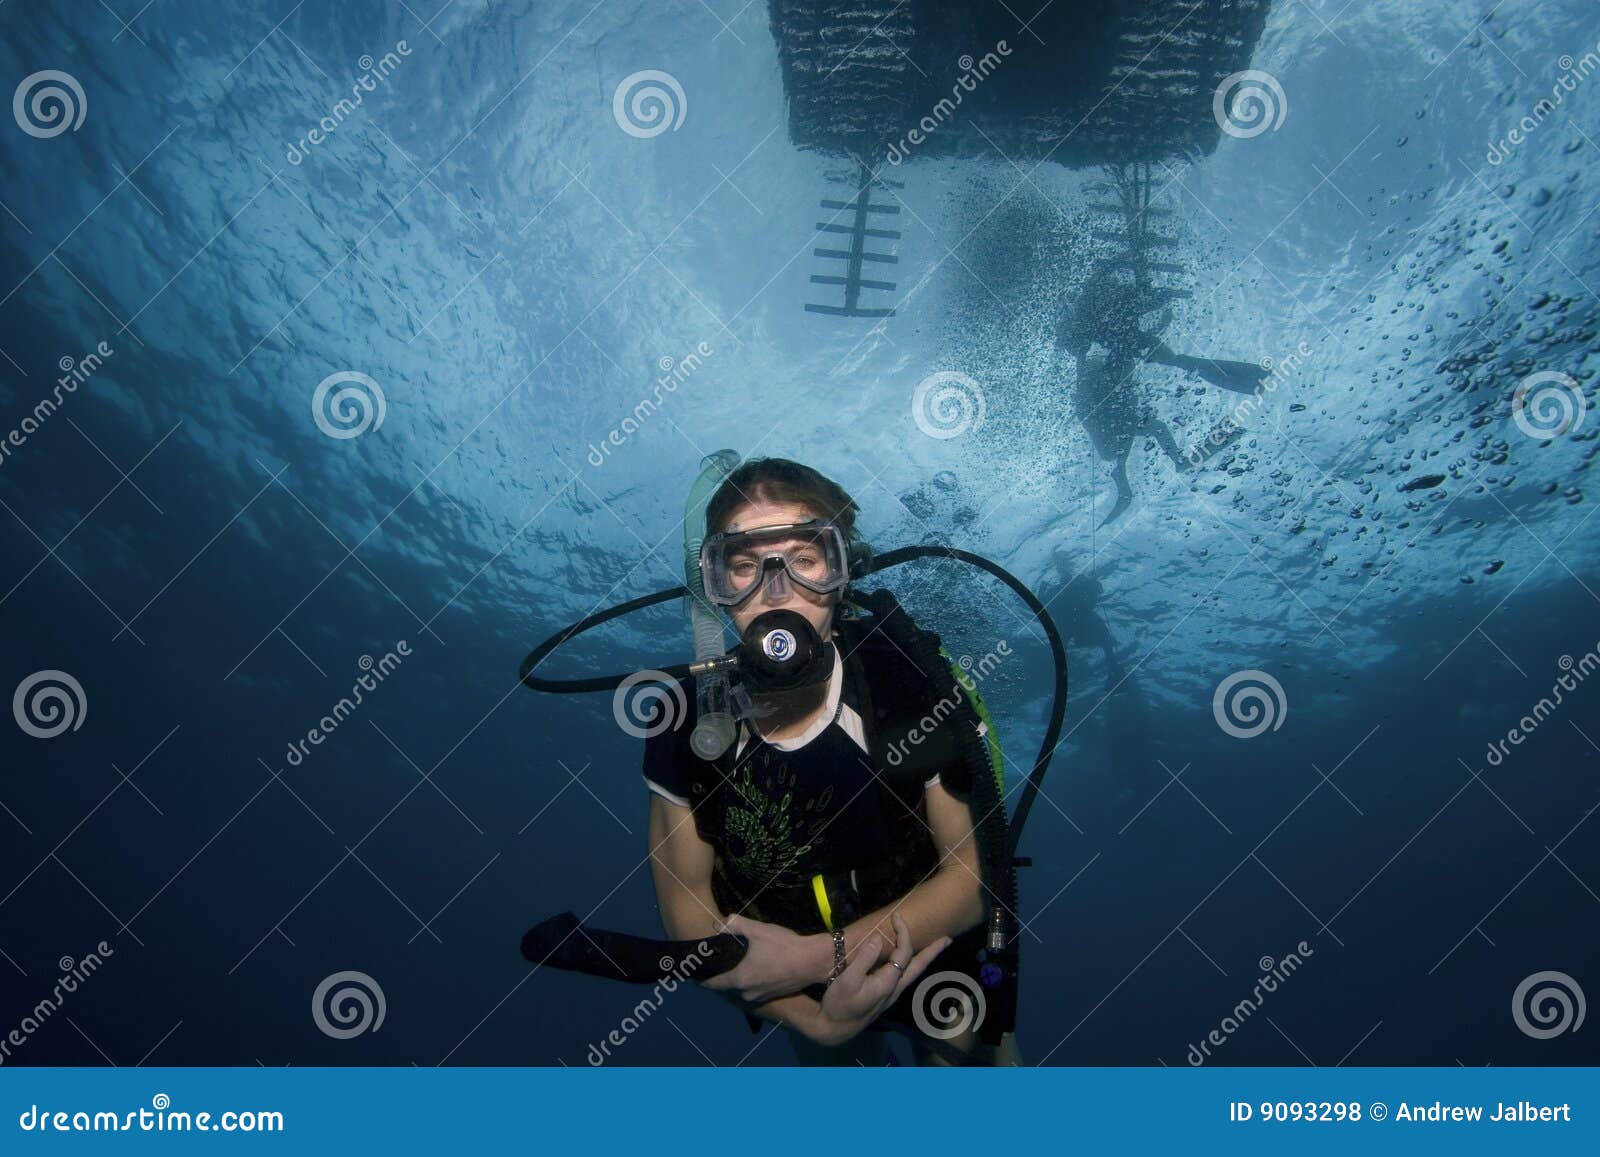 woman scuba diving, key largo